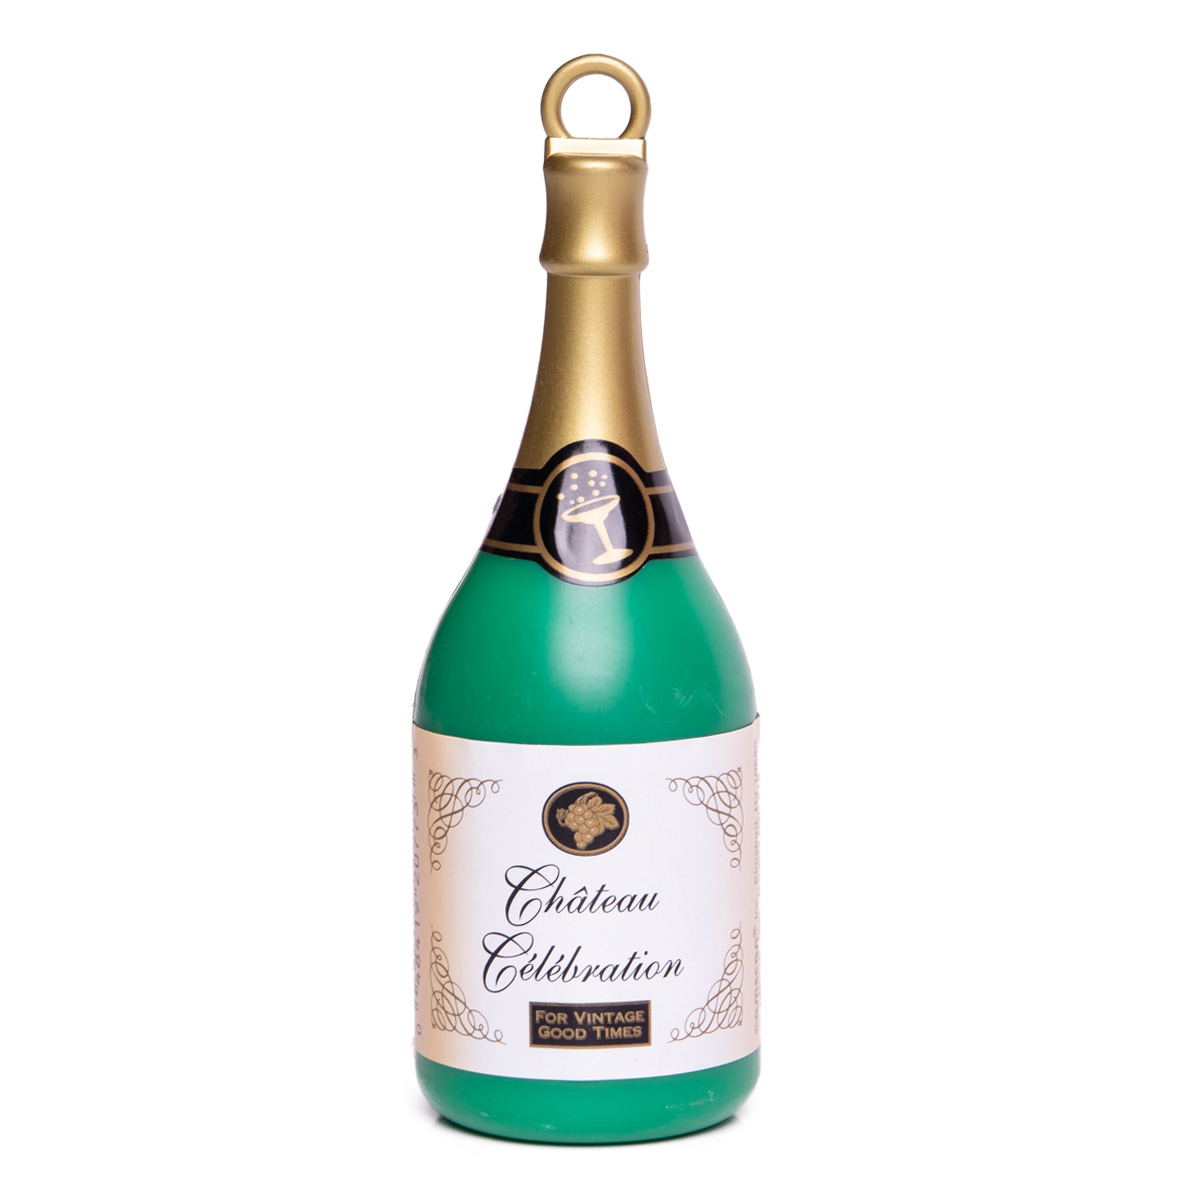 Ballongvikt champagneflaska